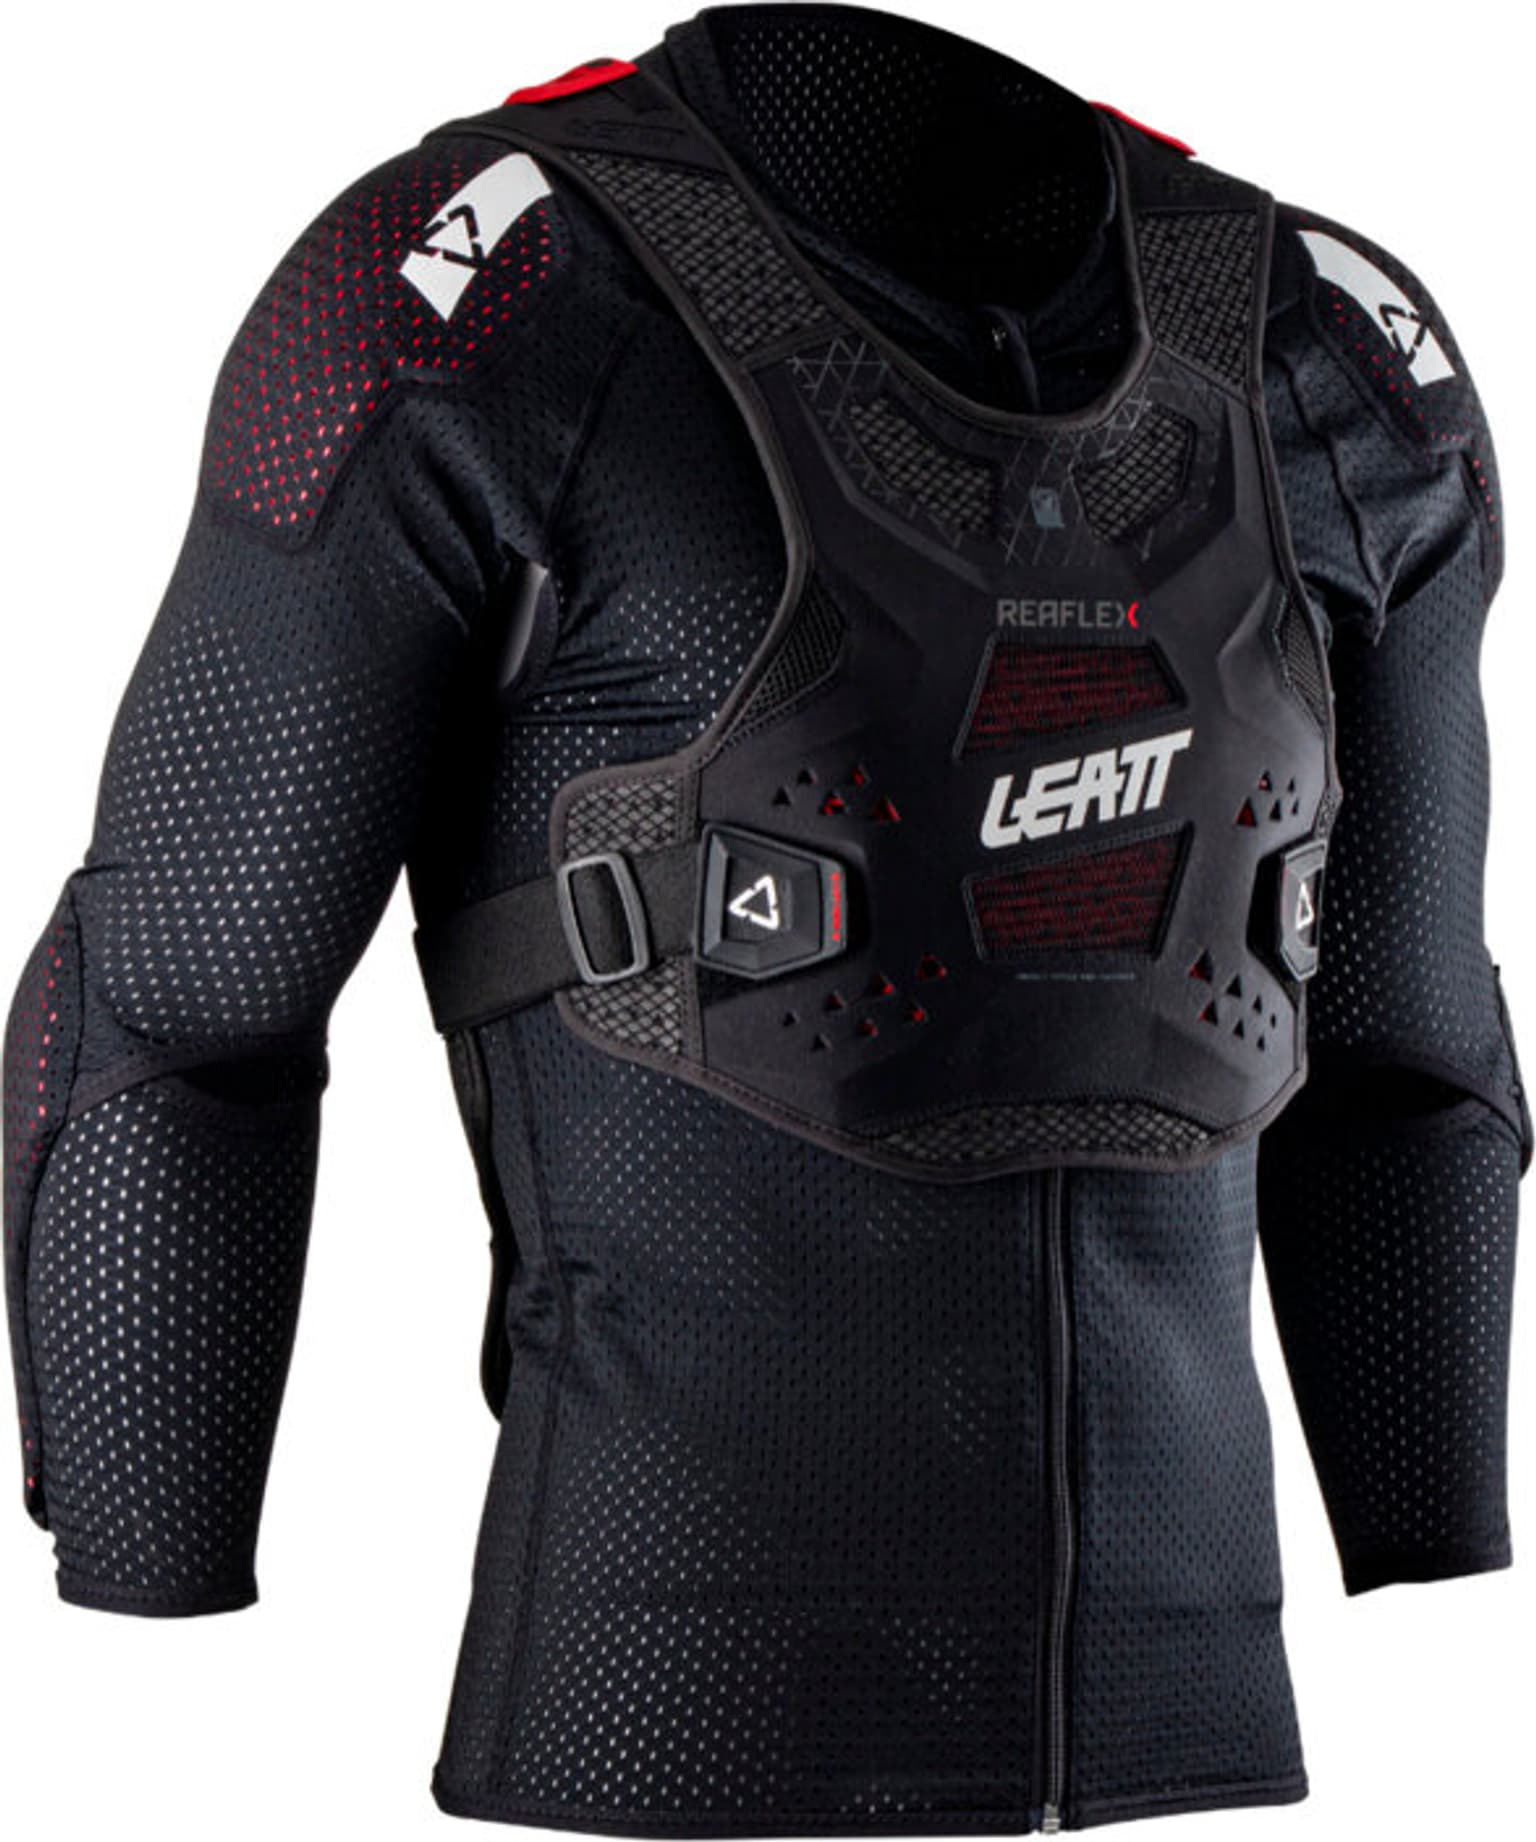 Leatt Leatt ReaFlex Body Protector Protektoren schwarz 1